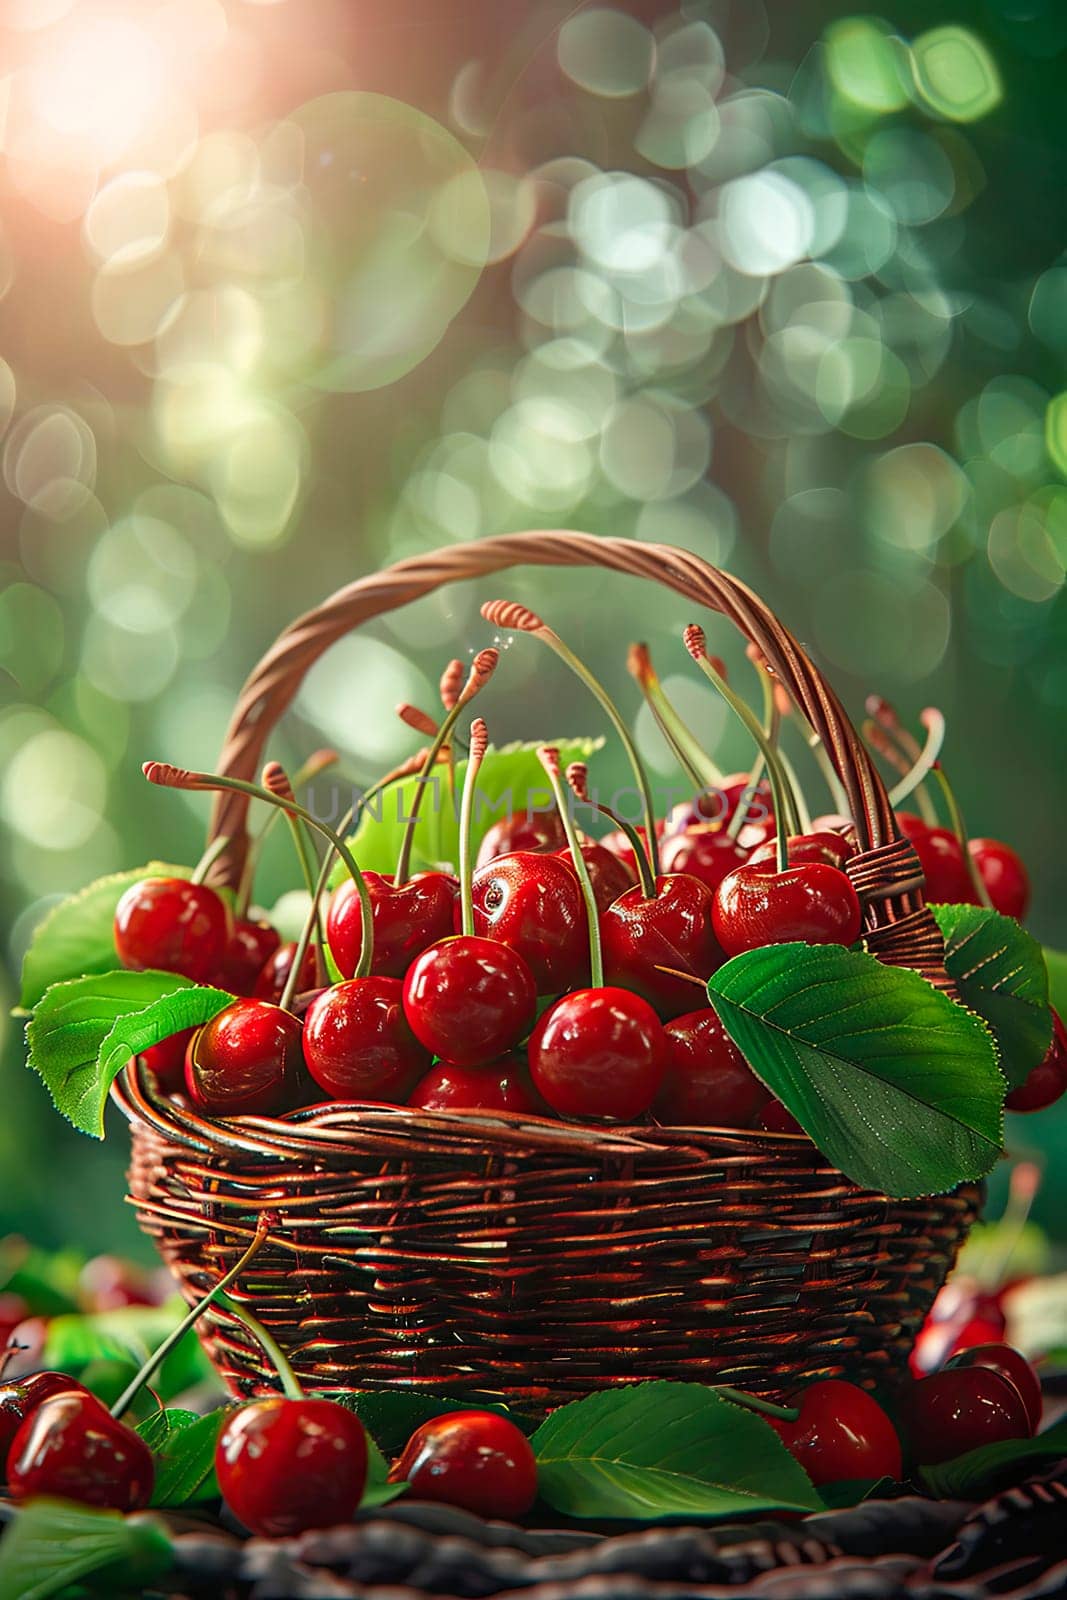 cherry in a basket in the garden. selective focus. by yanadjana